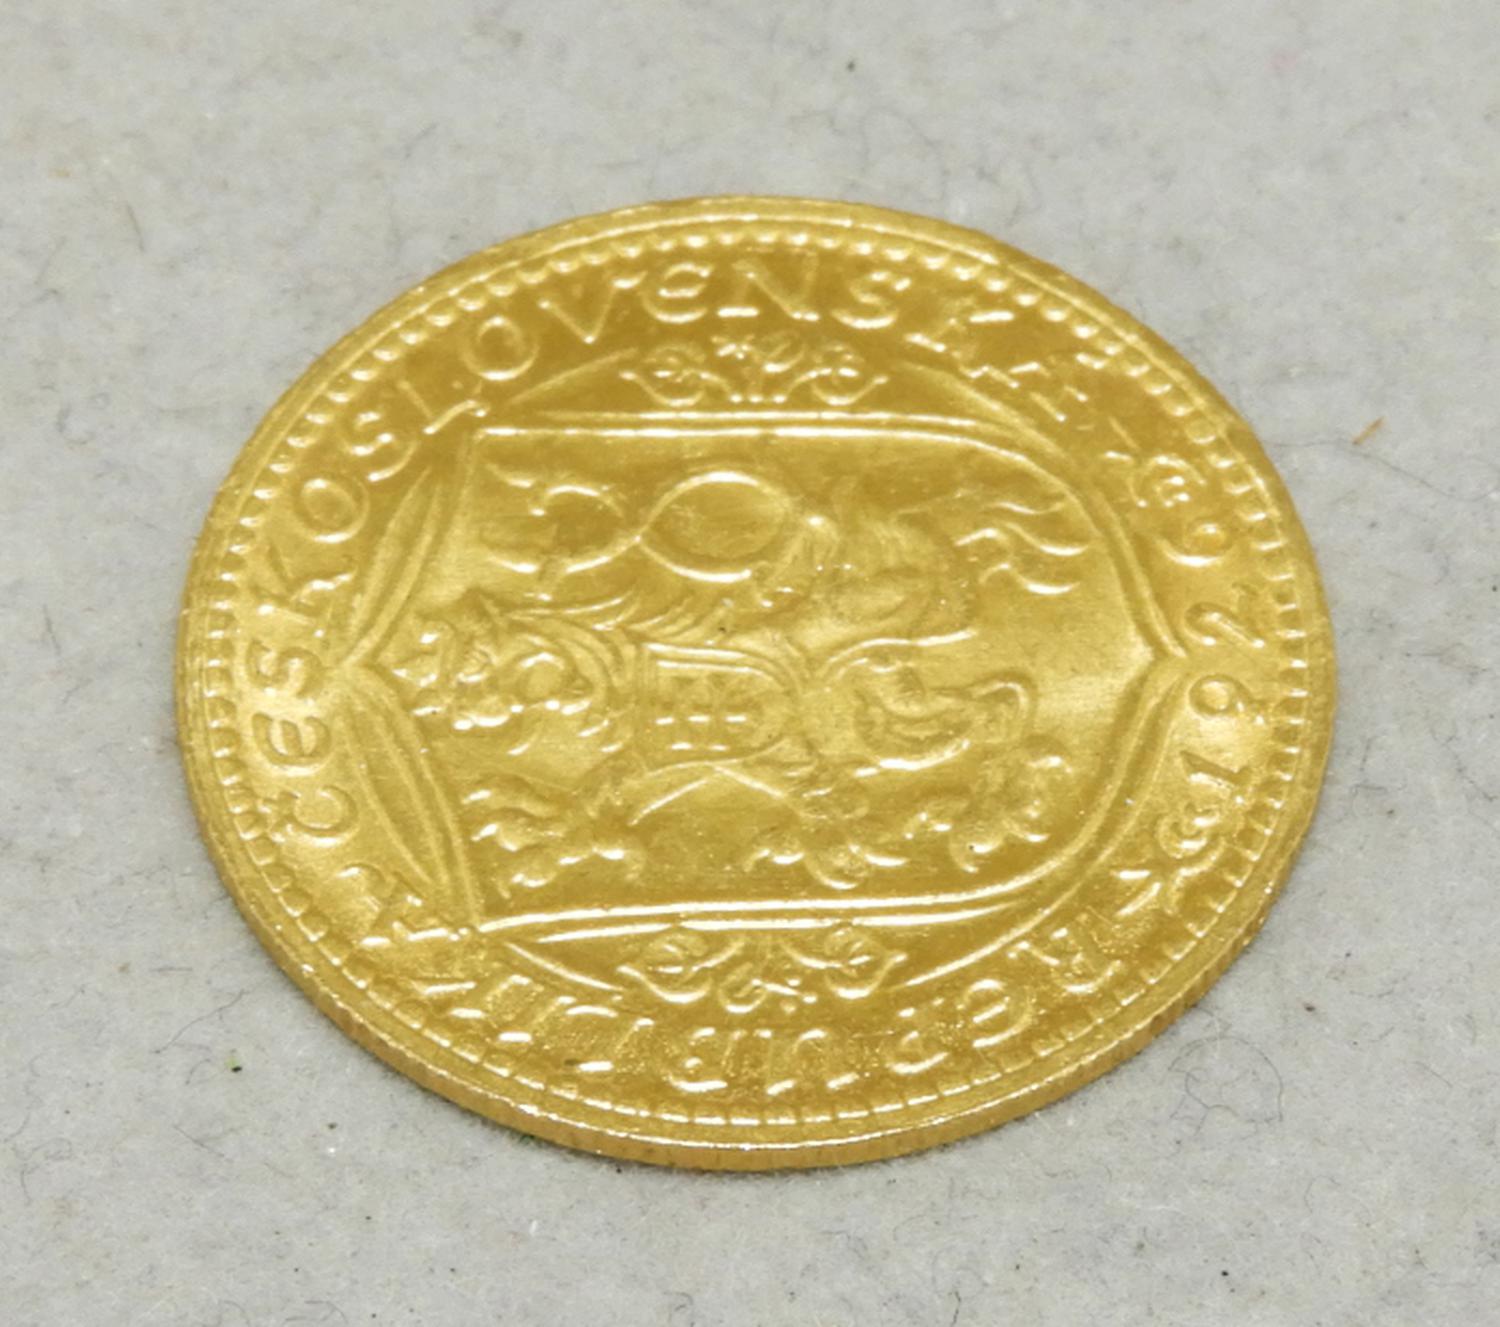 Murrays Auctioneers - Lot 30: 1926 Republika Ceskoslovenska gold coin